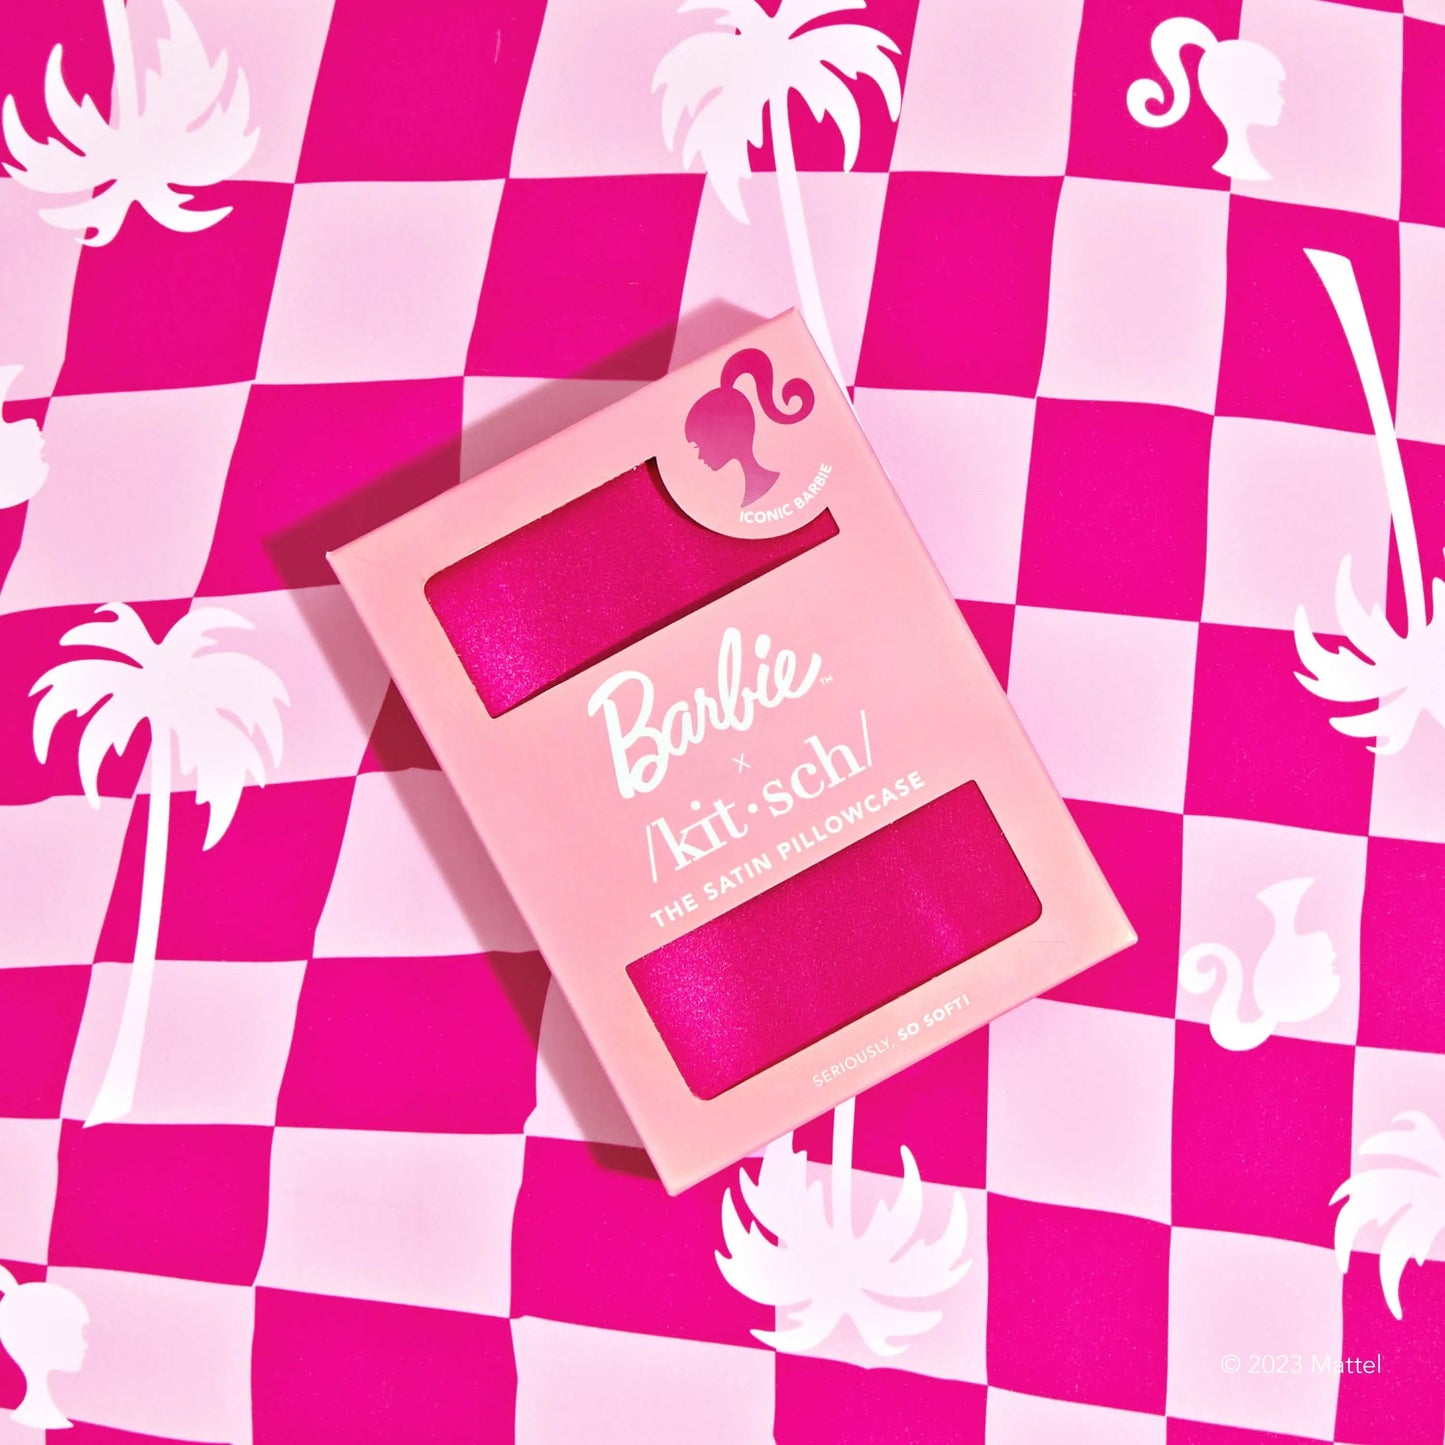 Barbie x Kitsch Satin Pillowcase - Pink